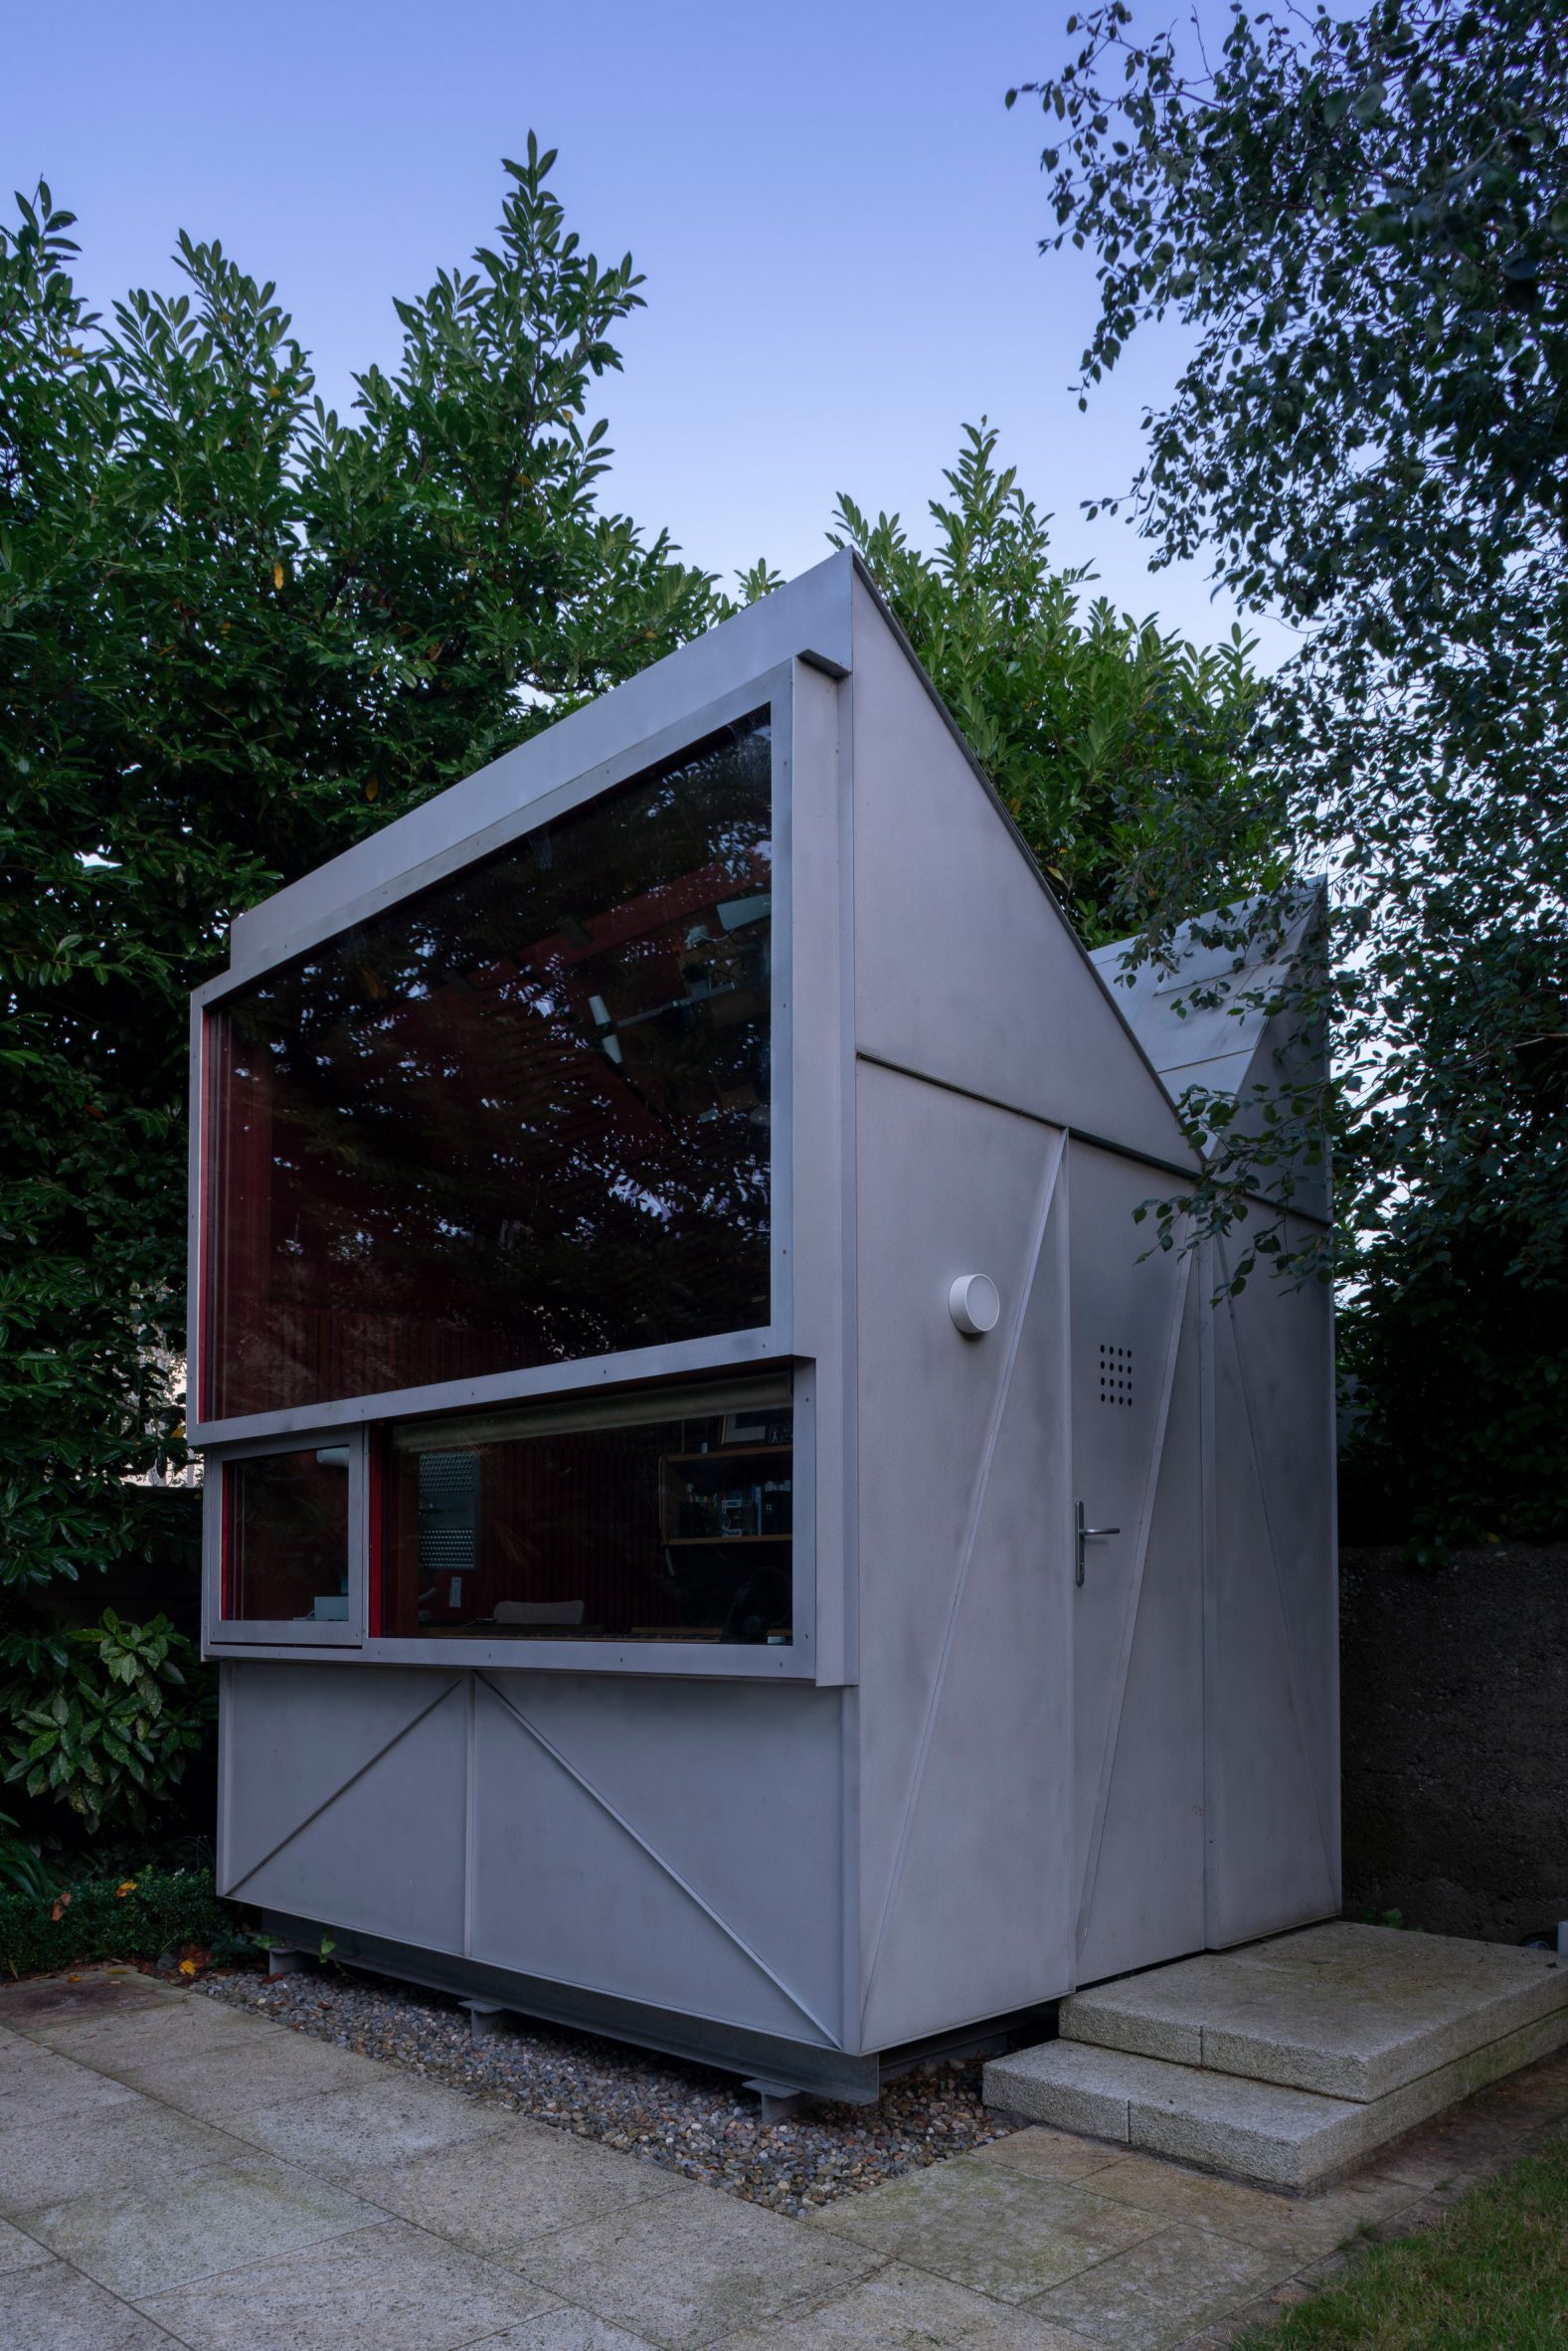 Triangular aluminium writer's hut by Clancy Moore Architects